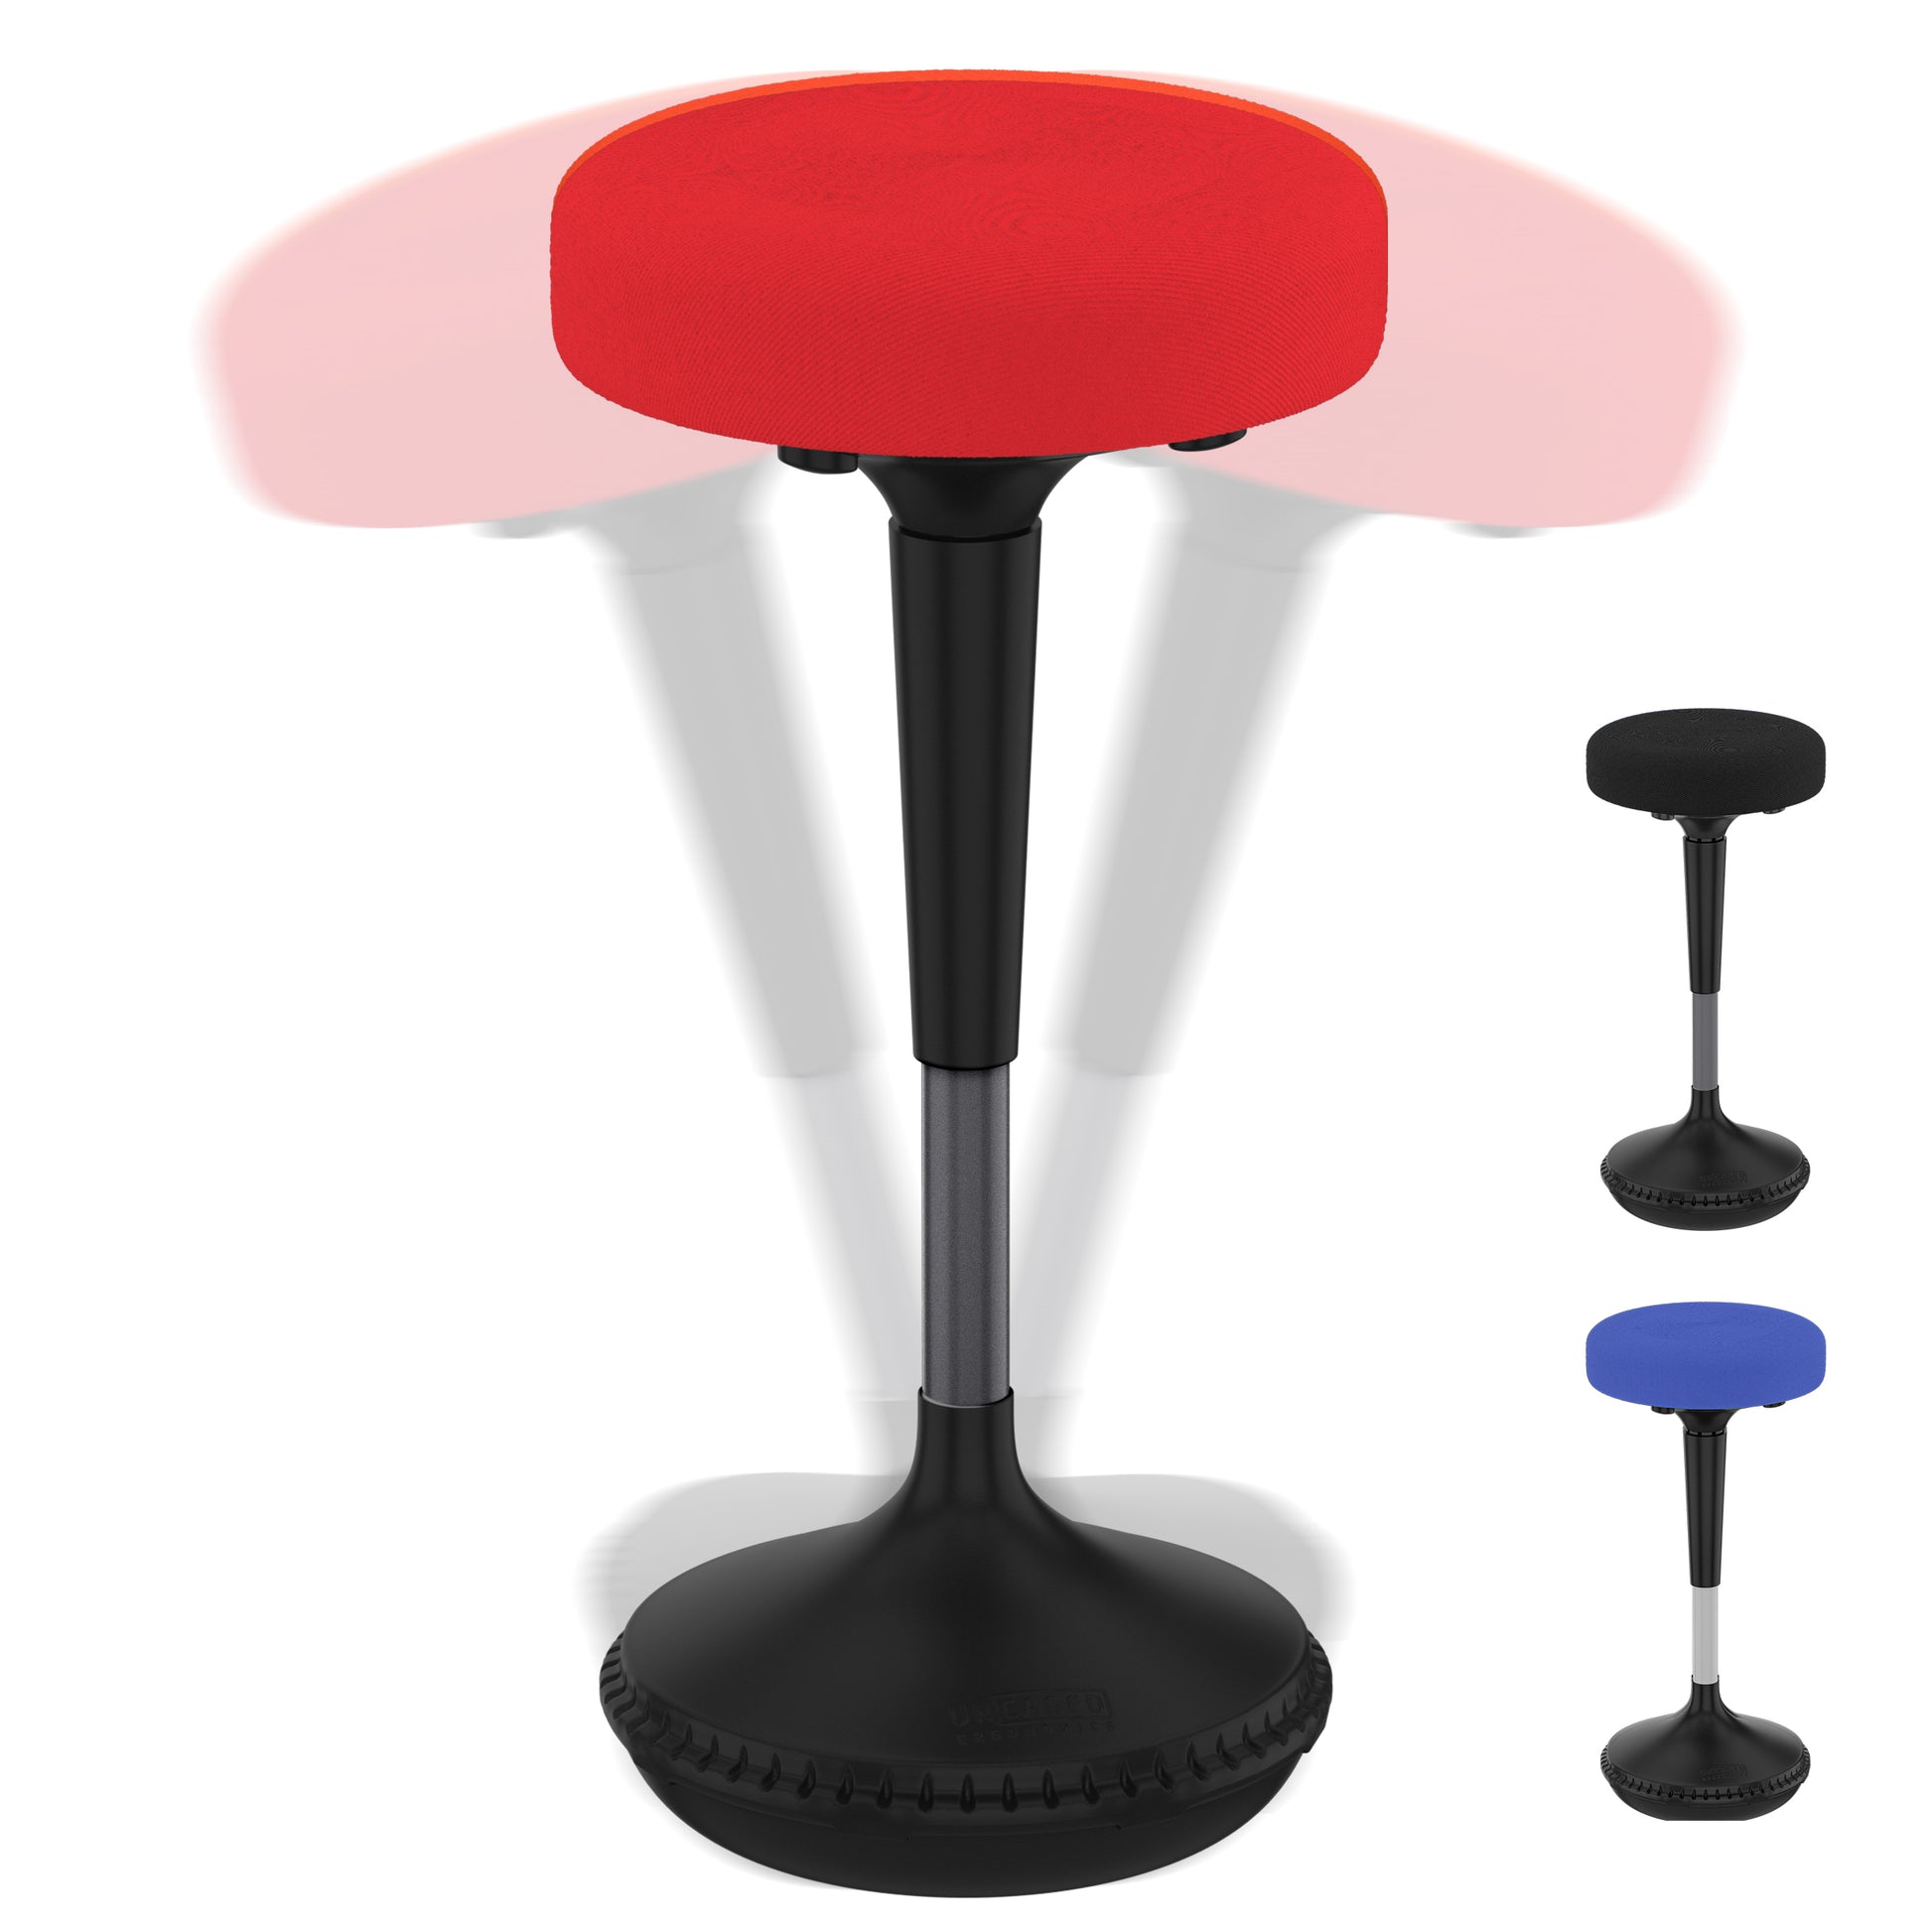 STOOL WOBBLE desk ergonomic UncagedErgonomics balance best – chair sit stool tall standing stand